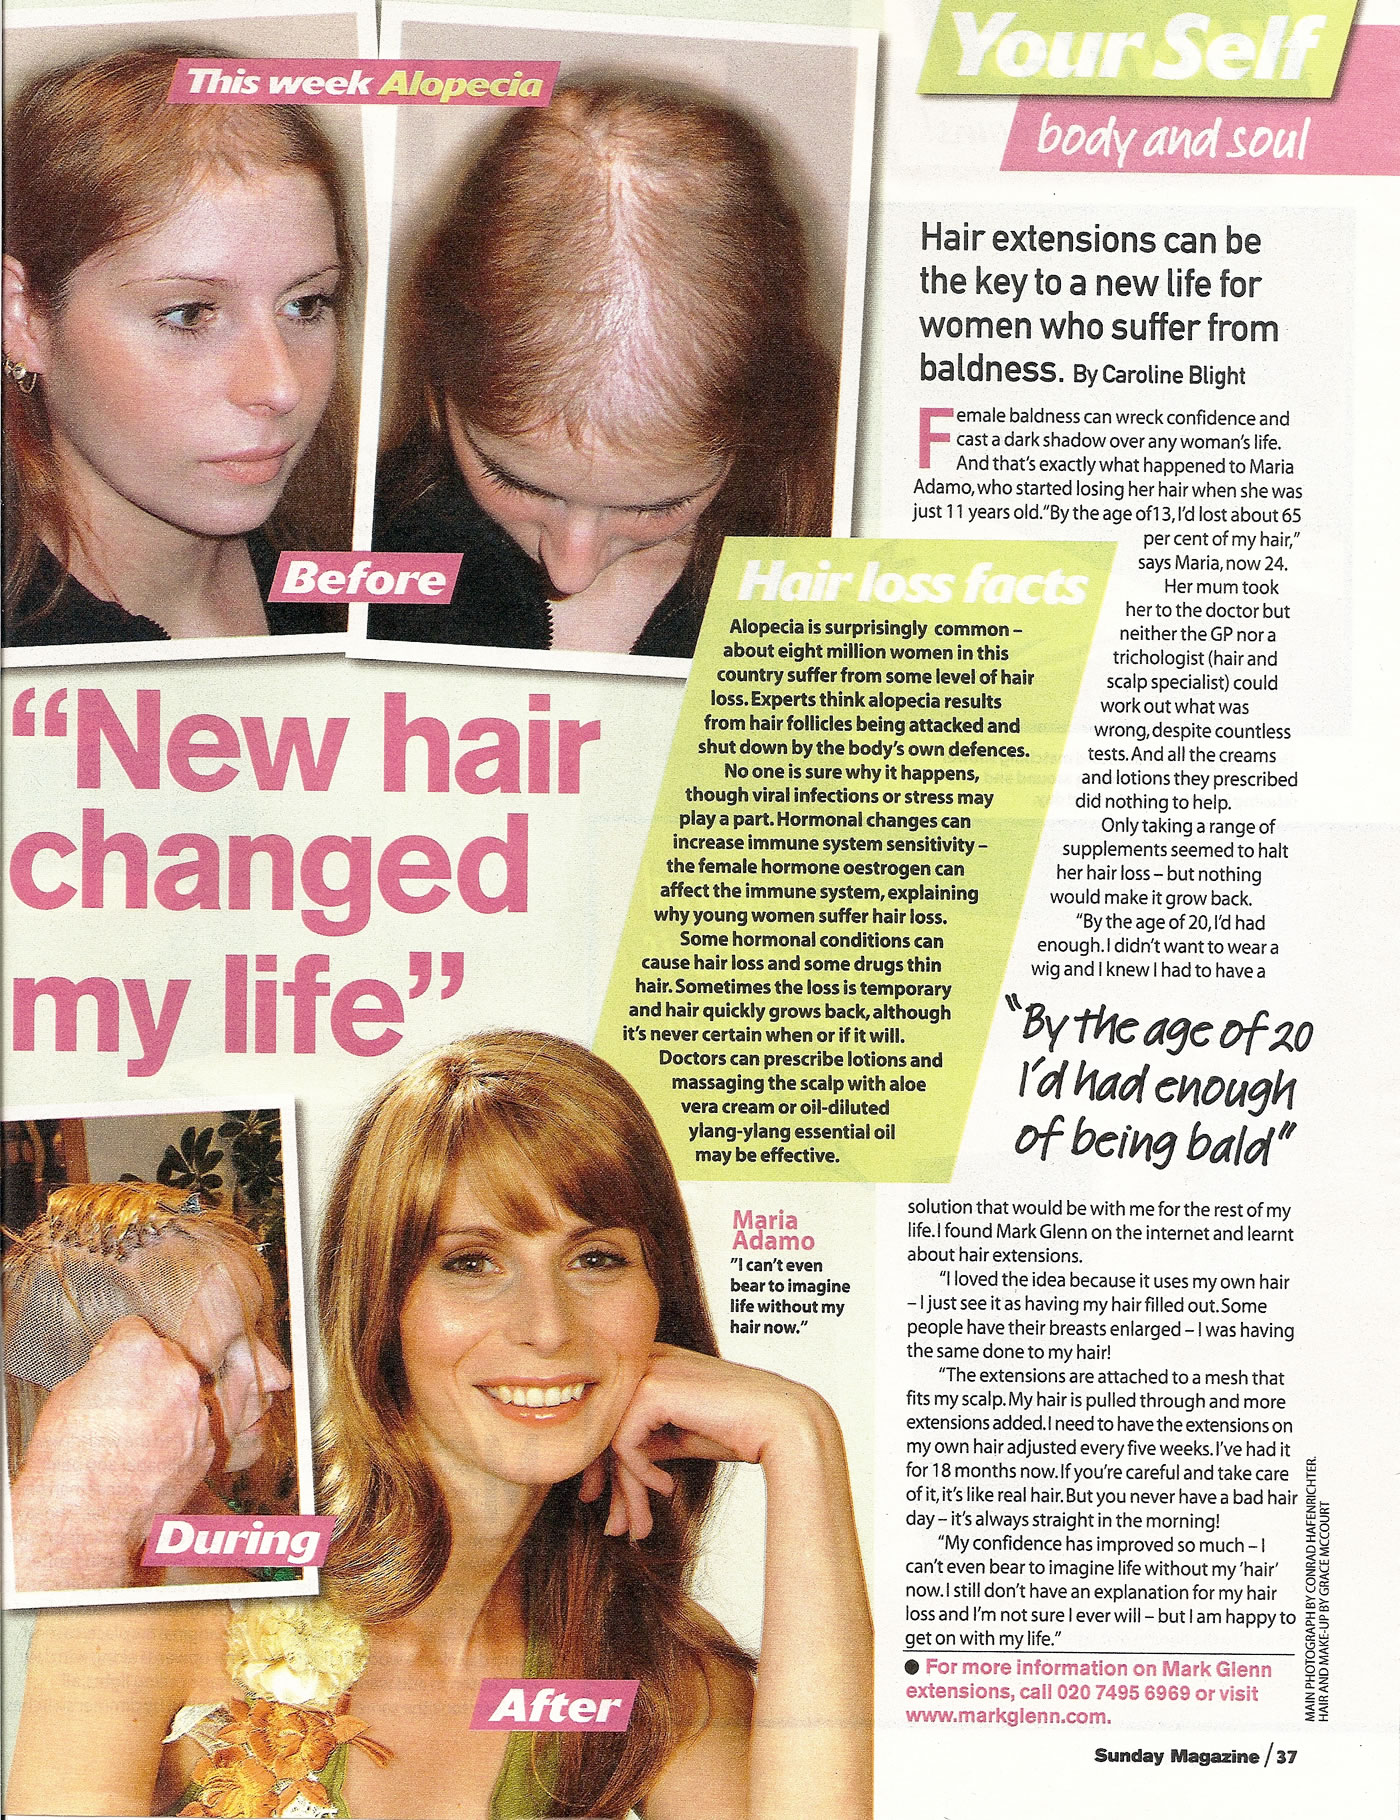 News of the World - 'New Hair at Mark Glenn Changed My Life' - Alopecia